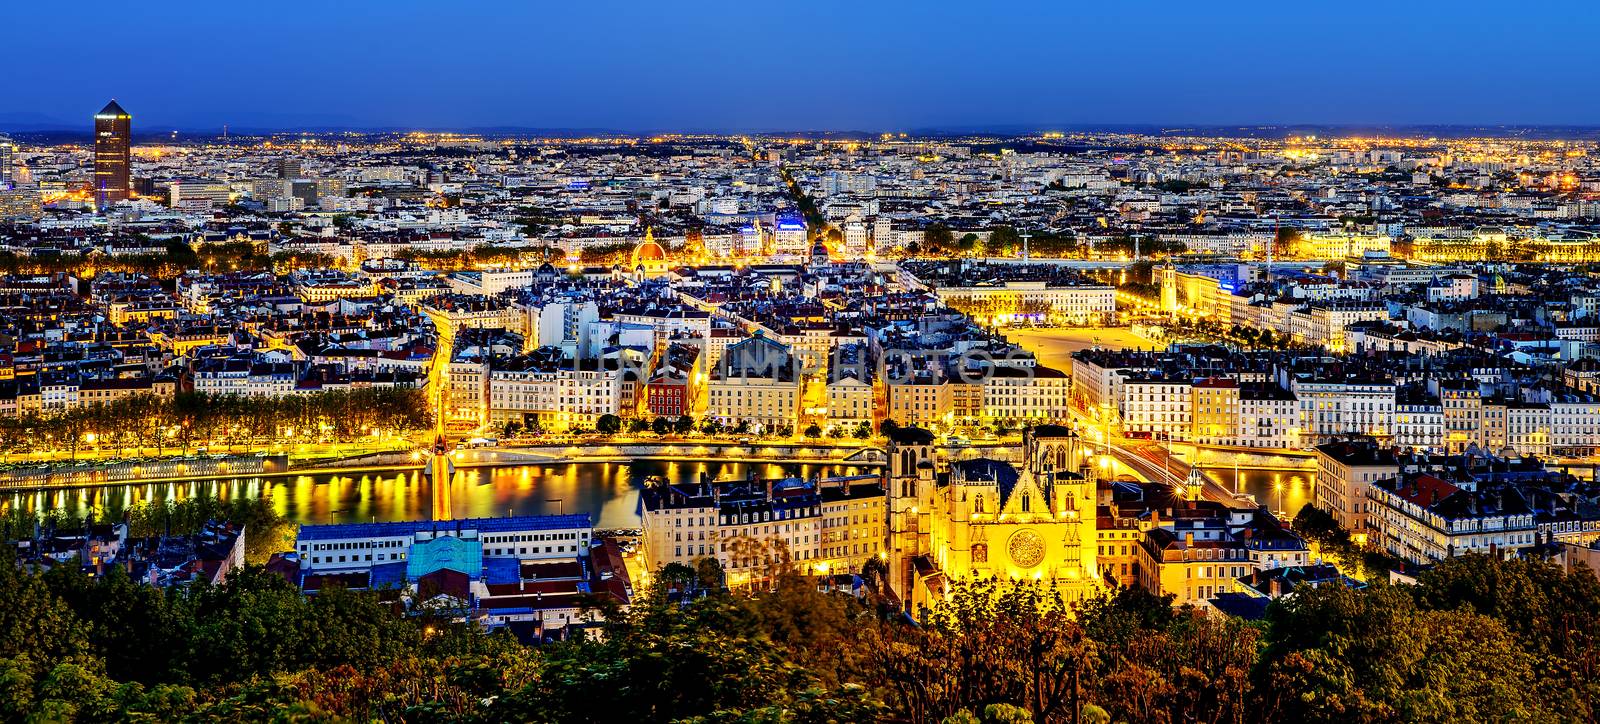 Lyon view by ventdusud